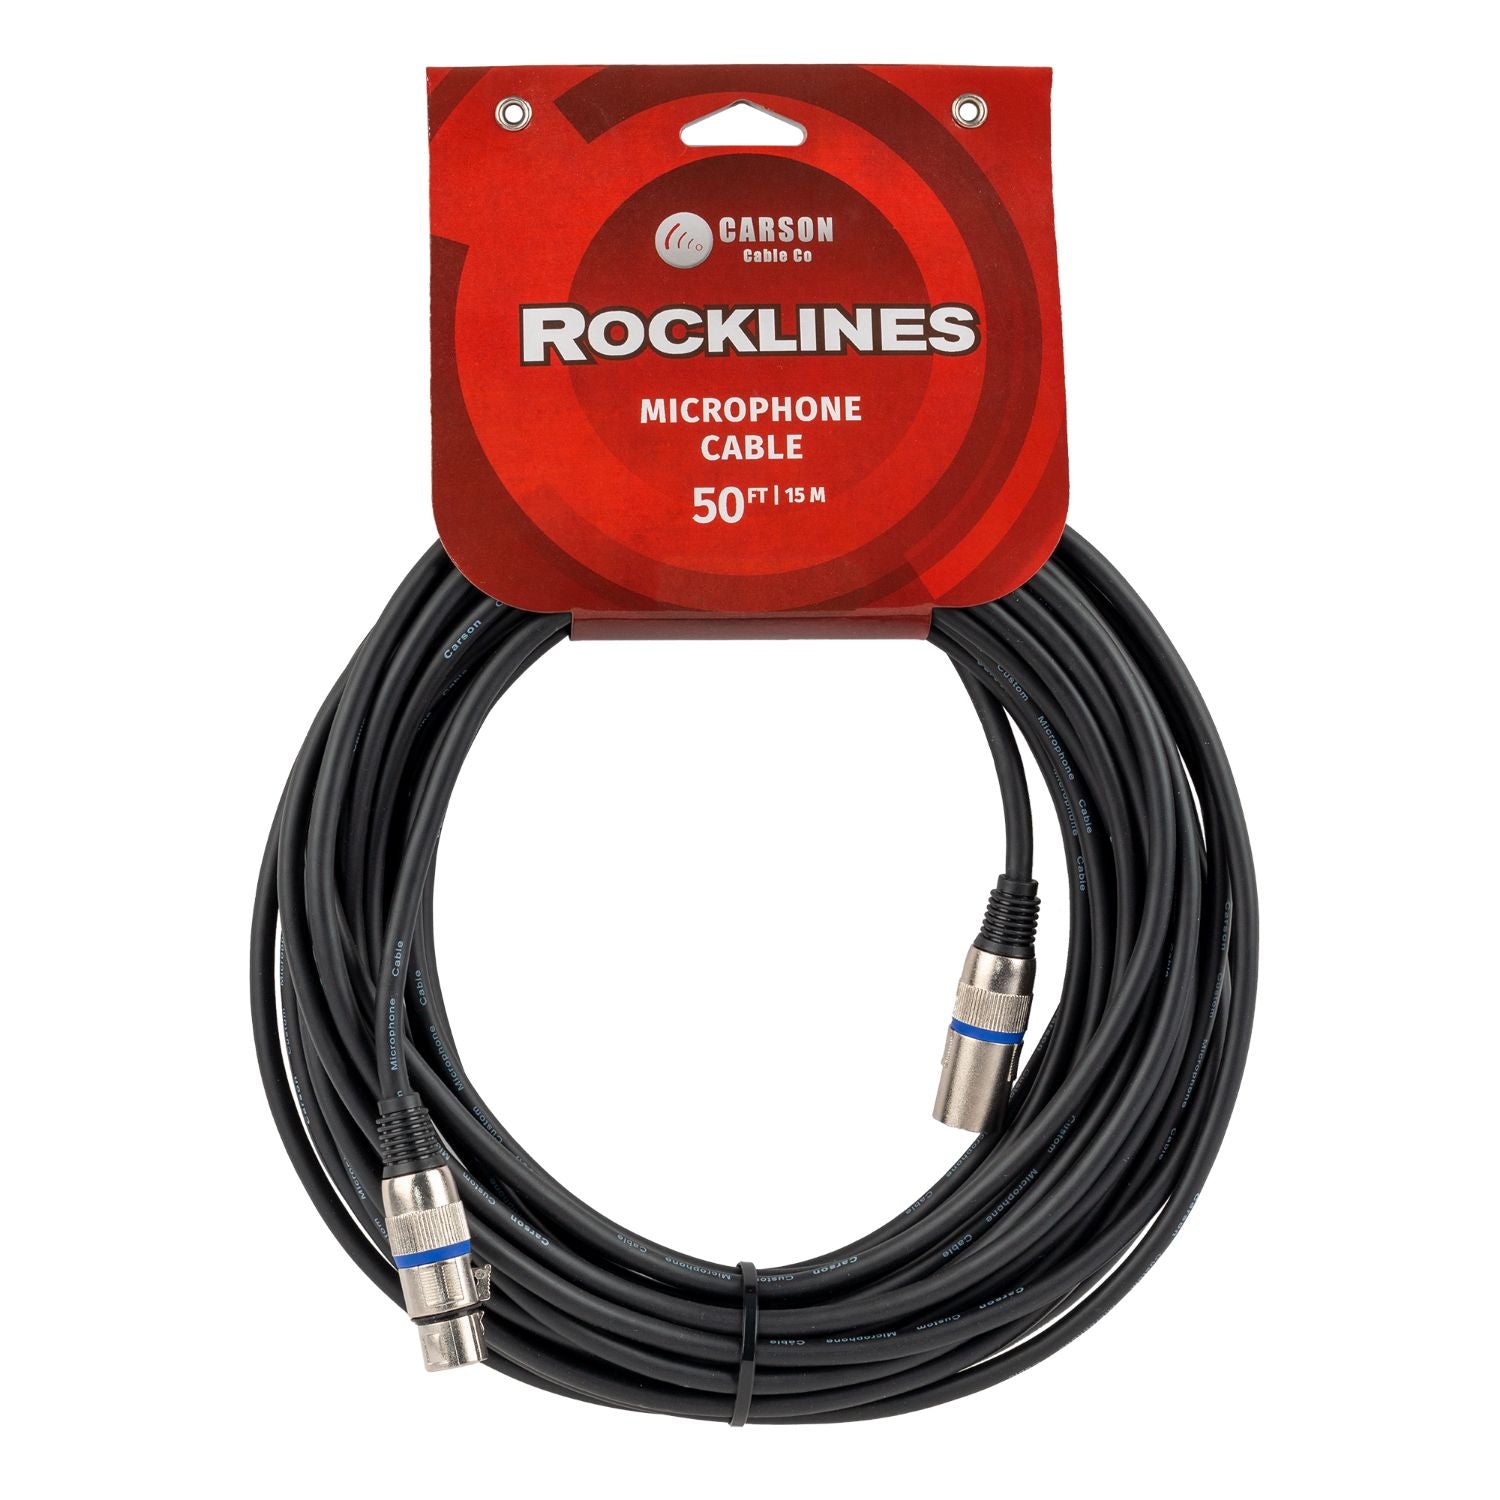 Carson Rocklines Microphone Cable, XLR - XLR